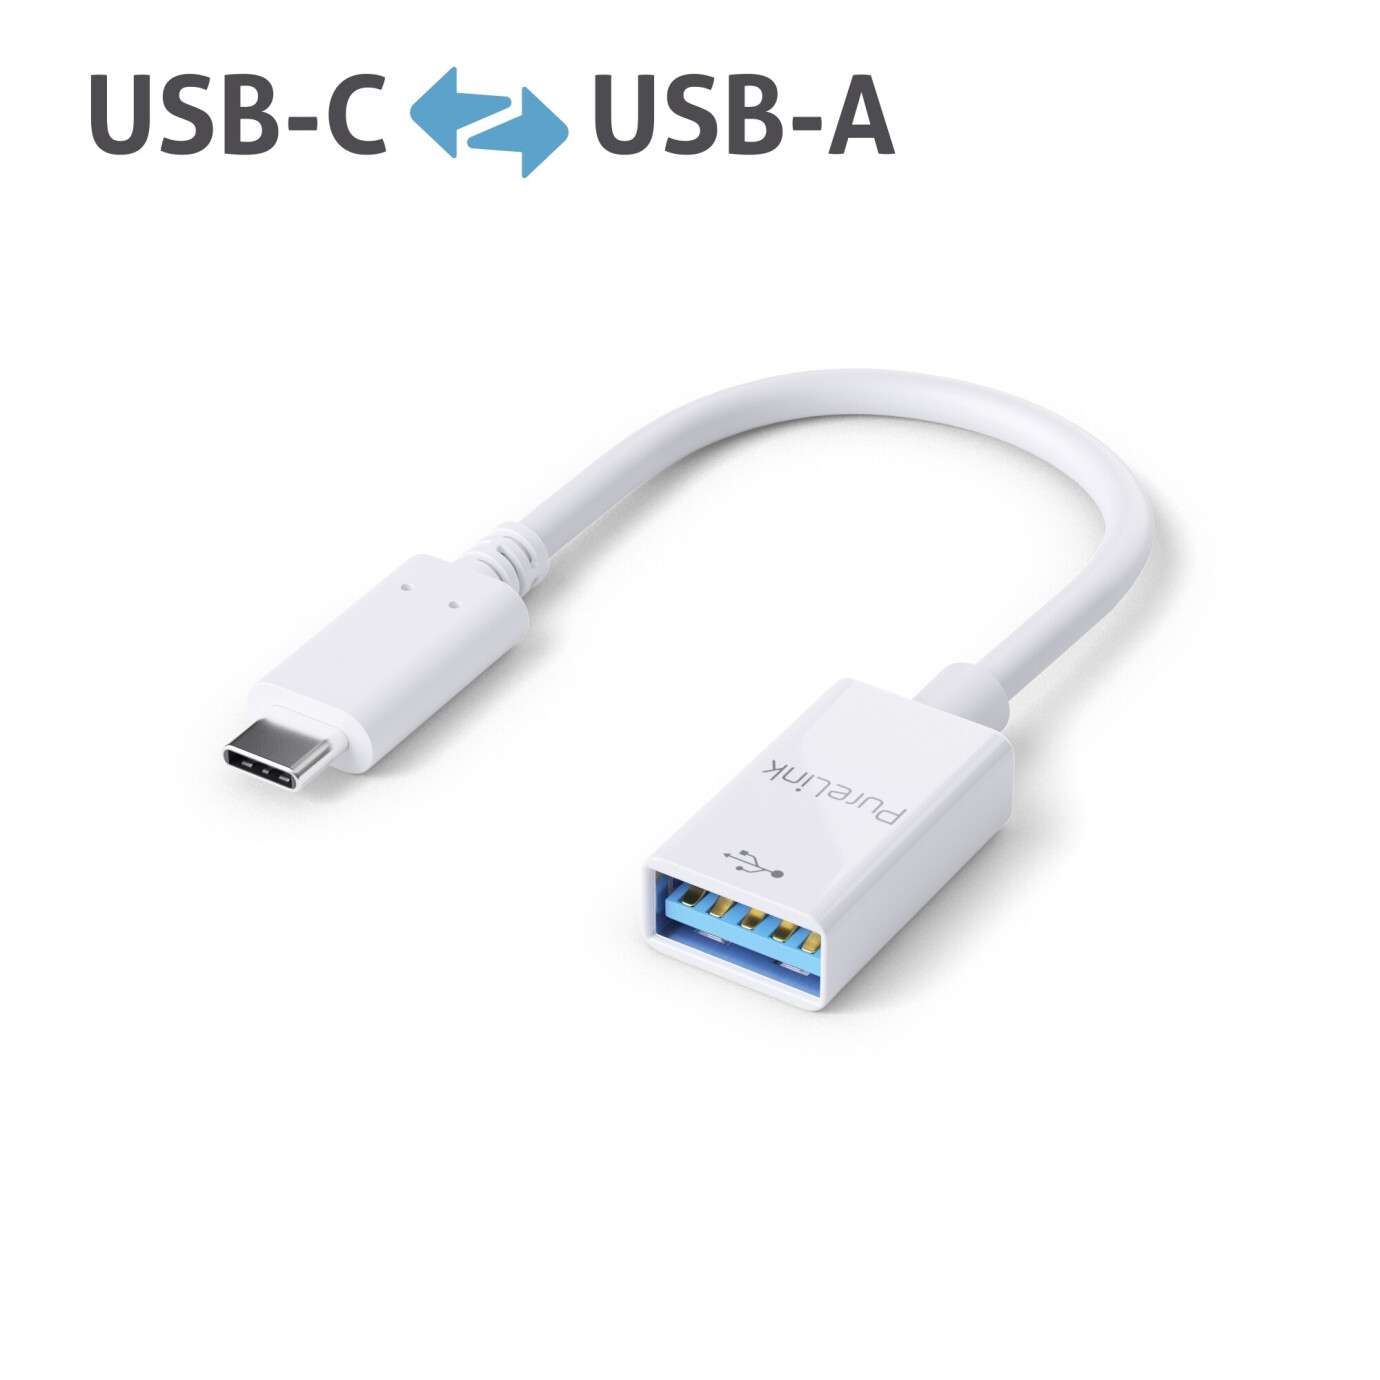 Purelink IS230 USB-C auf USB-A Adapter 0,1m weiß